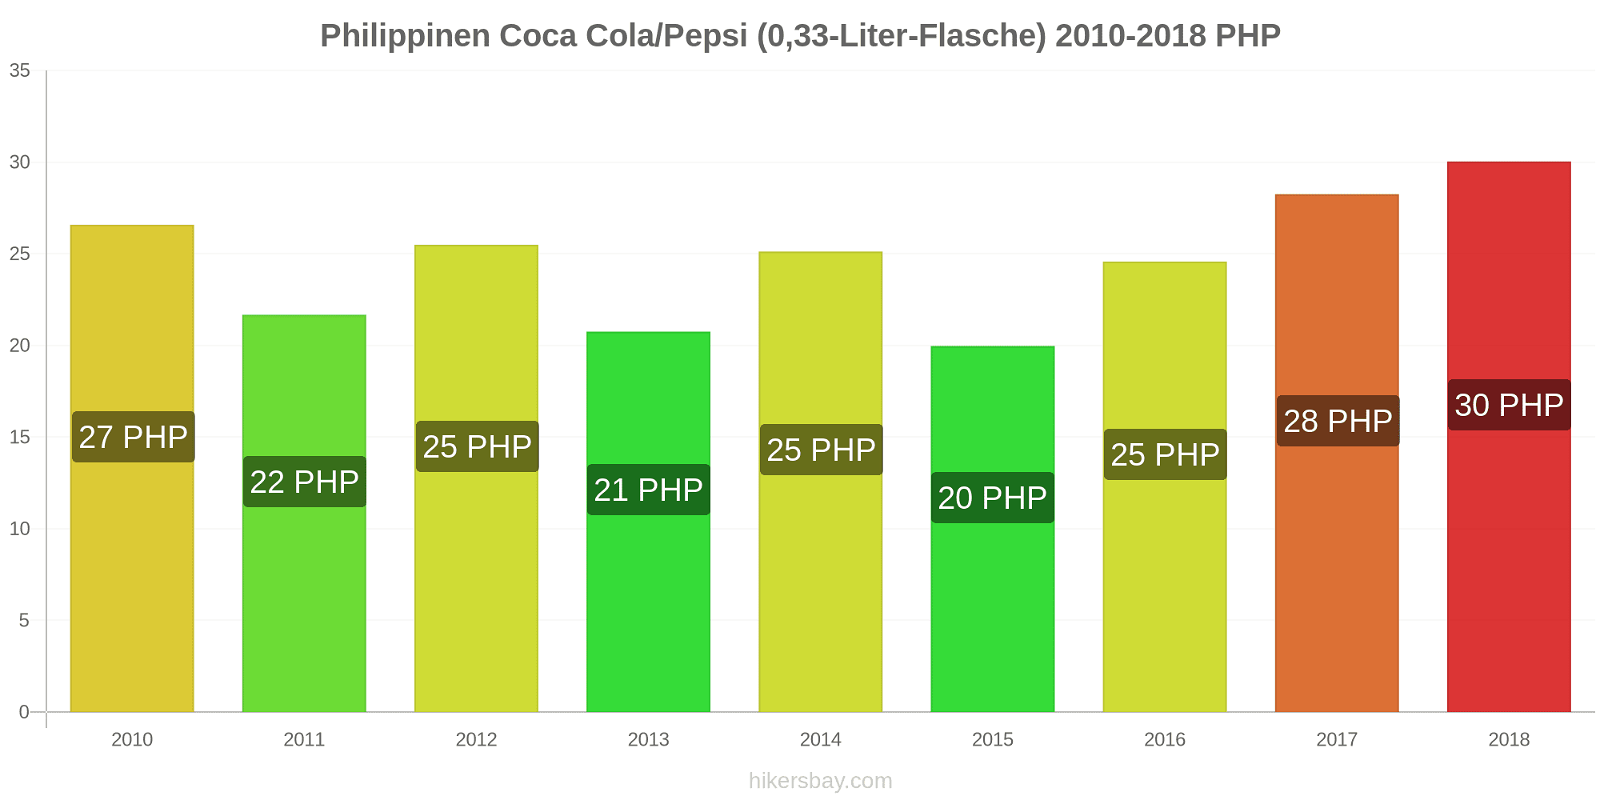 Philippinen Preisänderungen Coke/Pepsi (0,33-Liter-Flasche) hikersbay.com